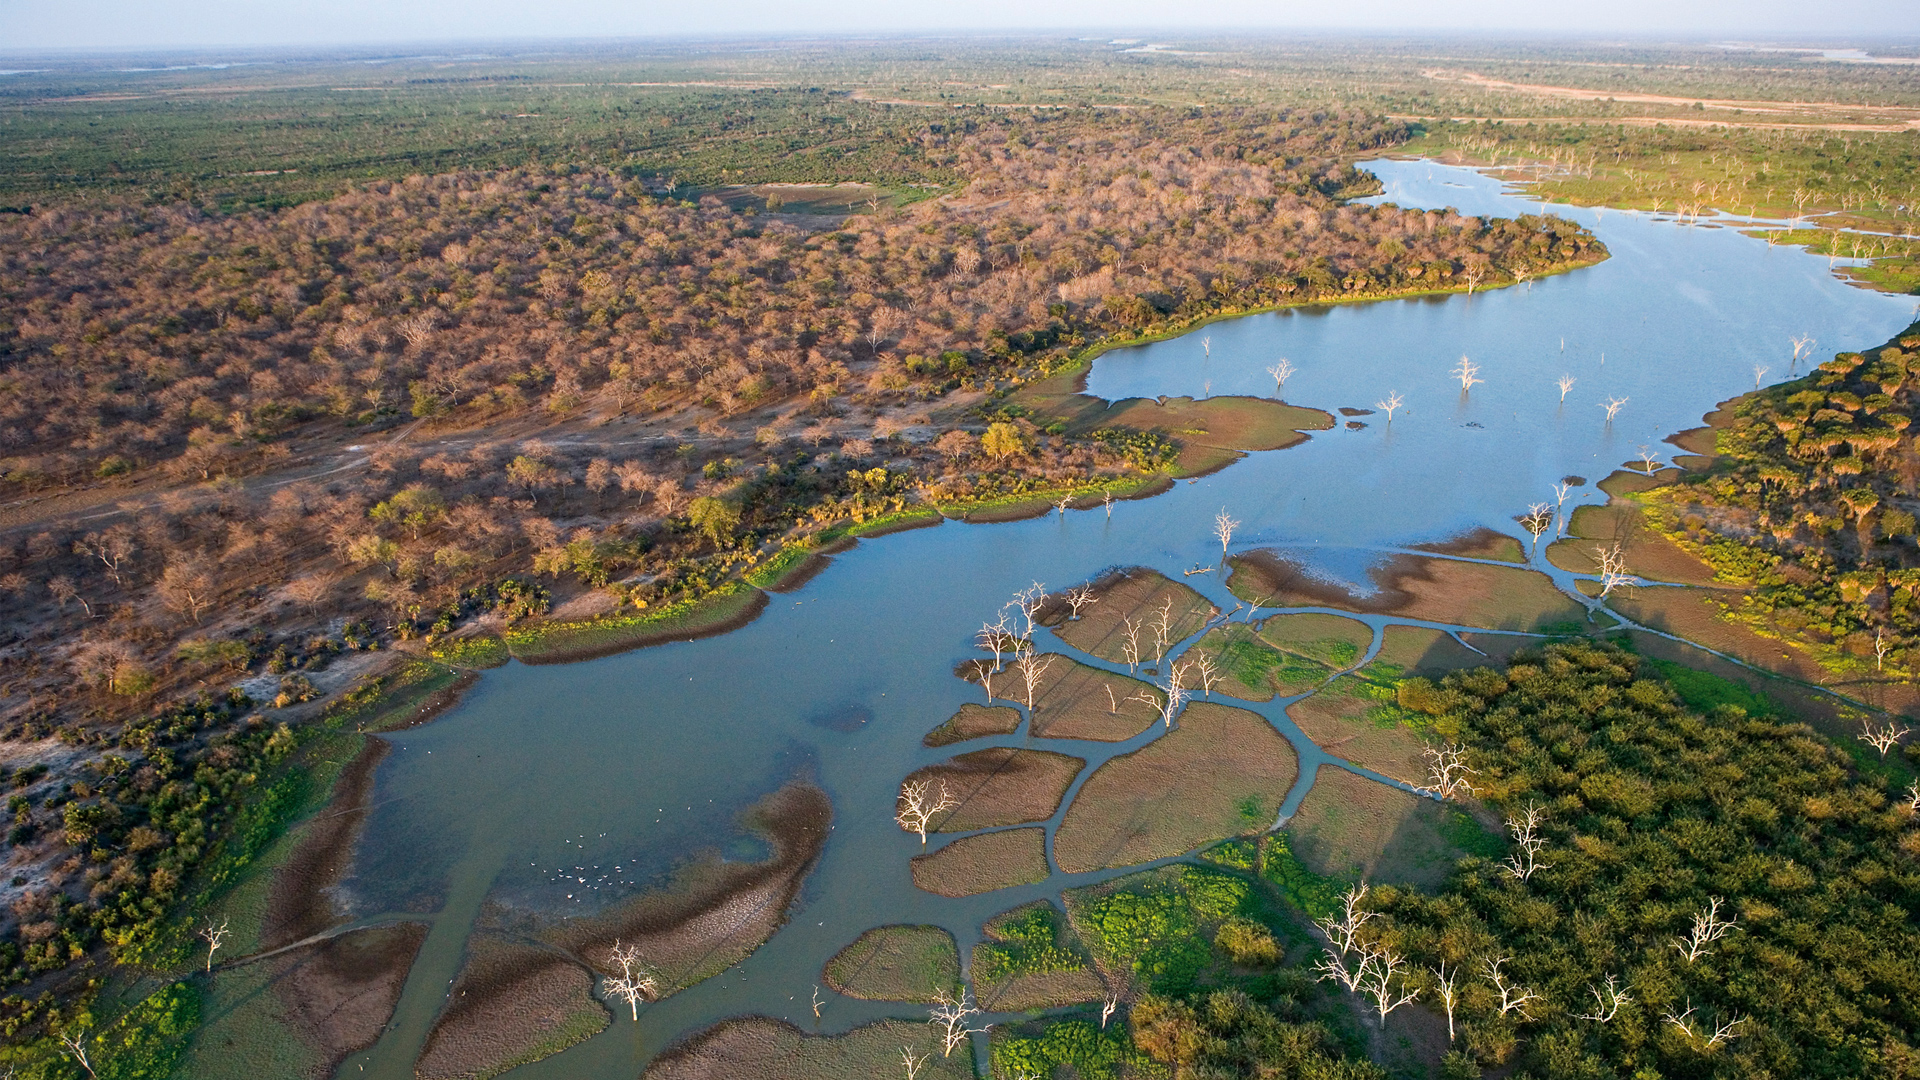 Pirschfahrten im Moremi-Nationalpark & Bootsfahrt im Okavango-Delta , Safari-Weltreisen